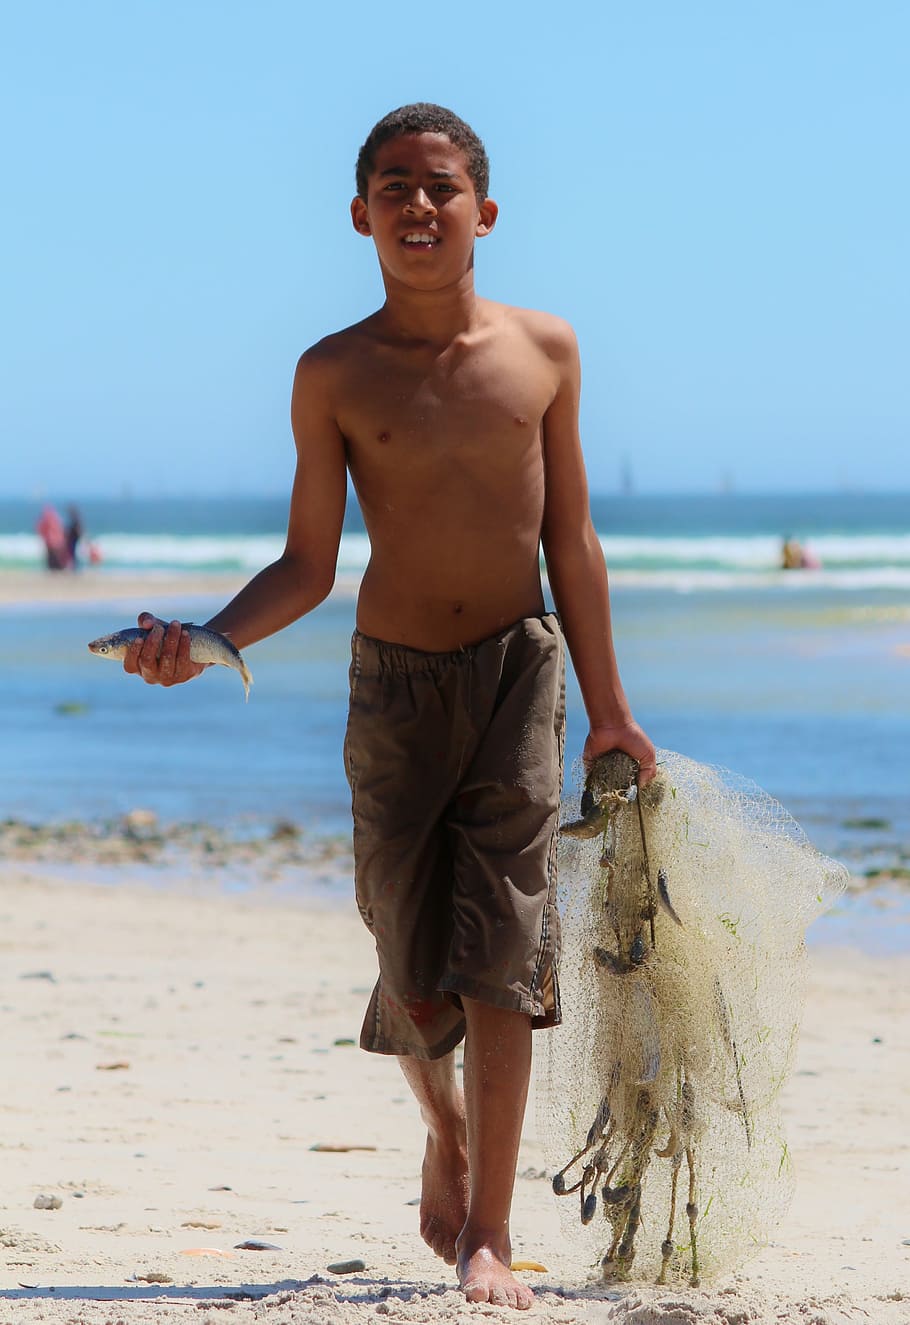 HD wallpaper: boy holding fish and net near seashore, beach, ocean, network